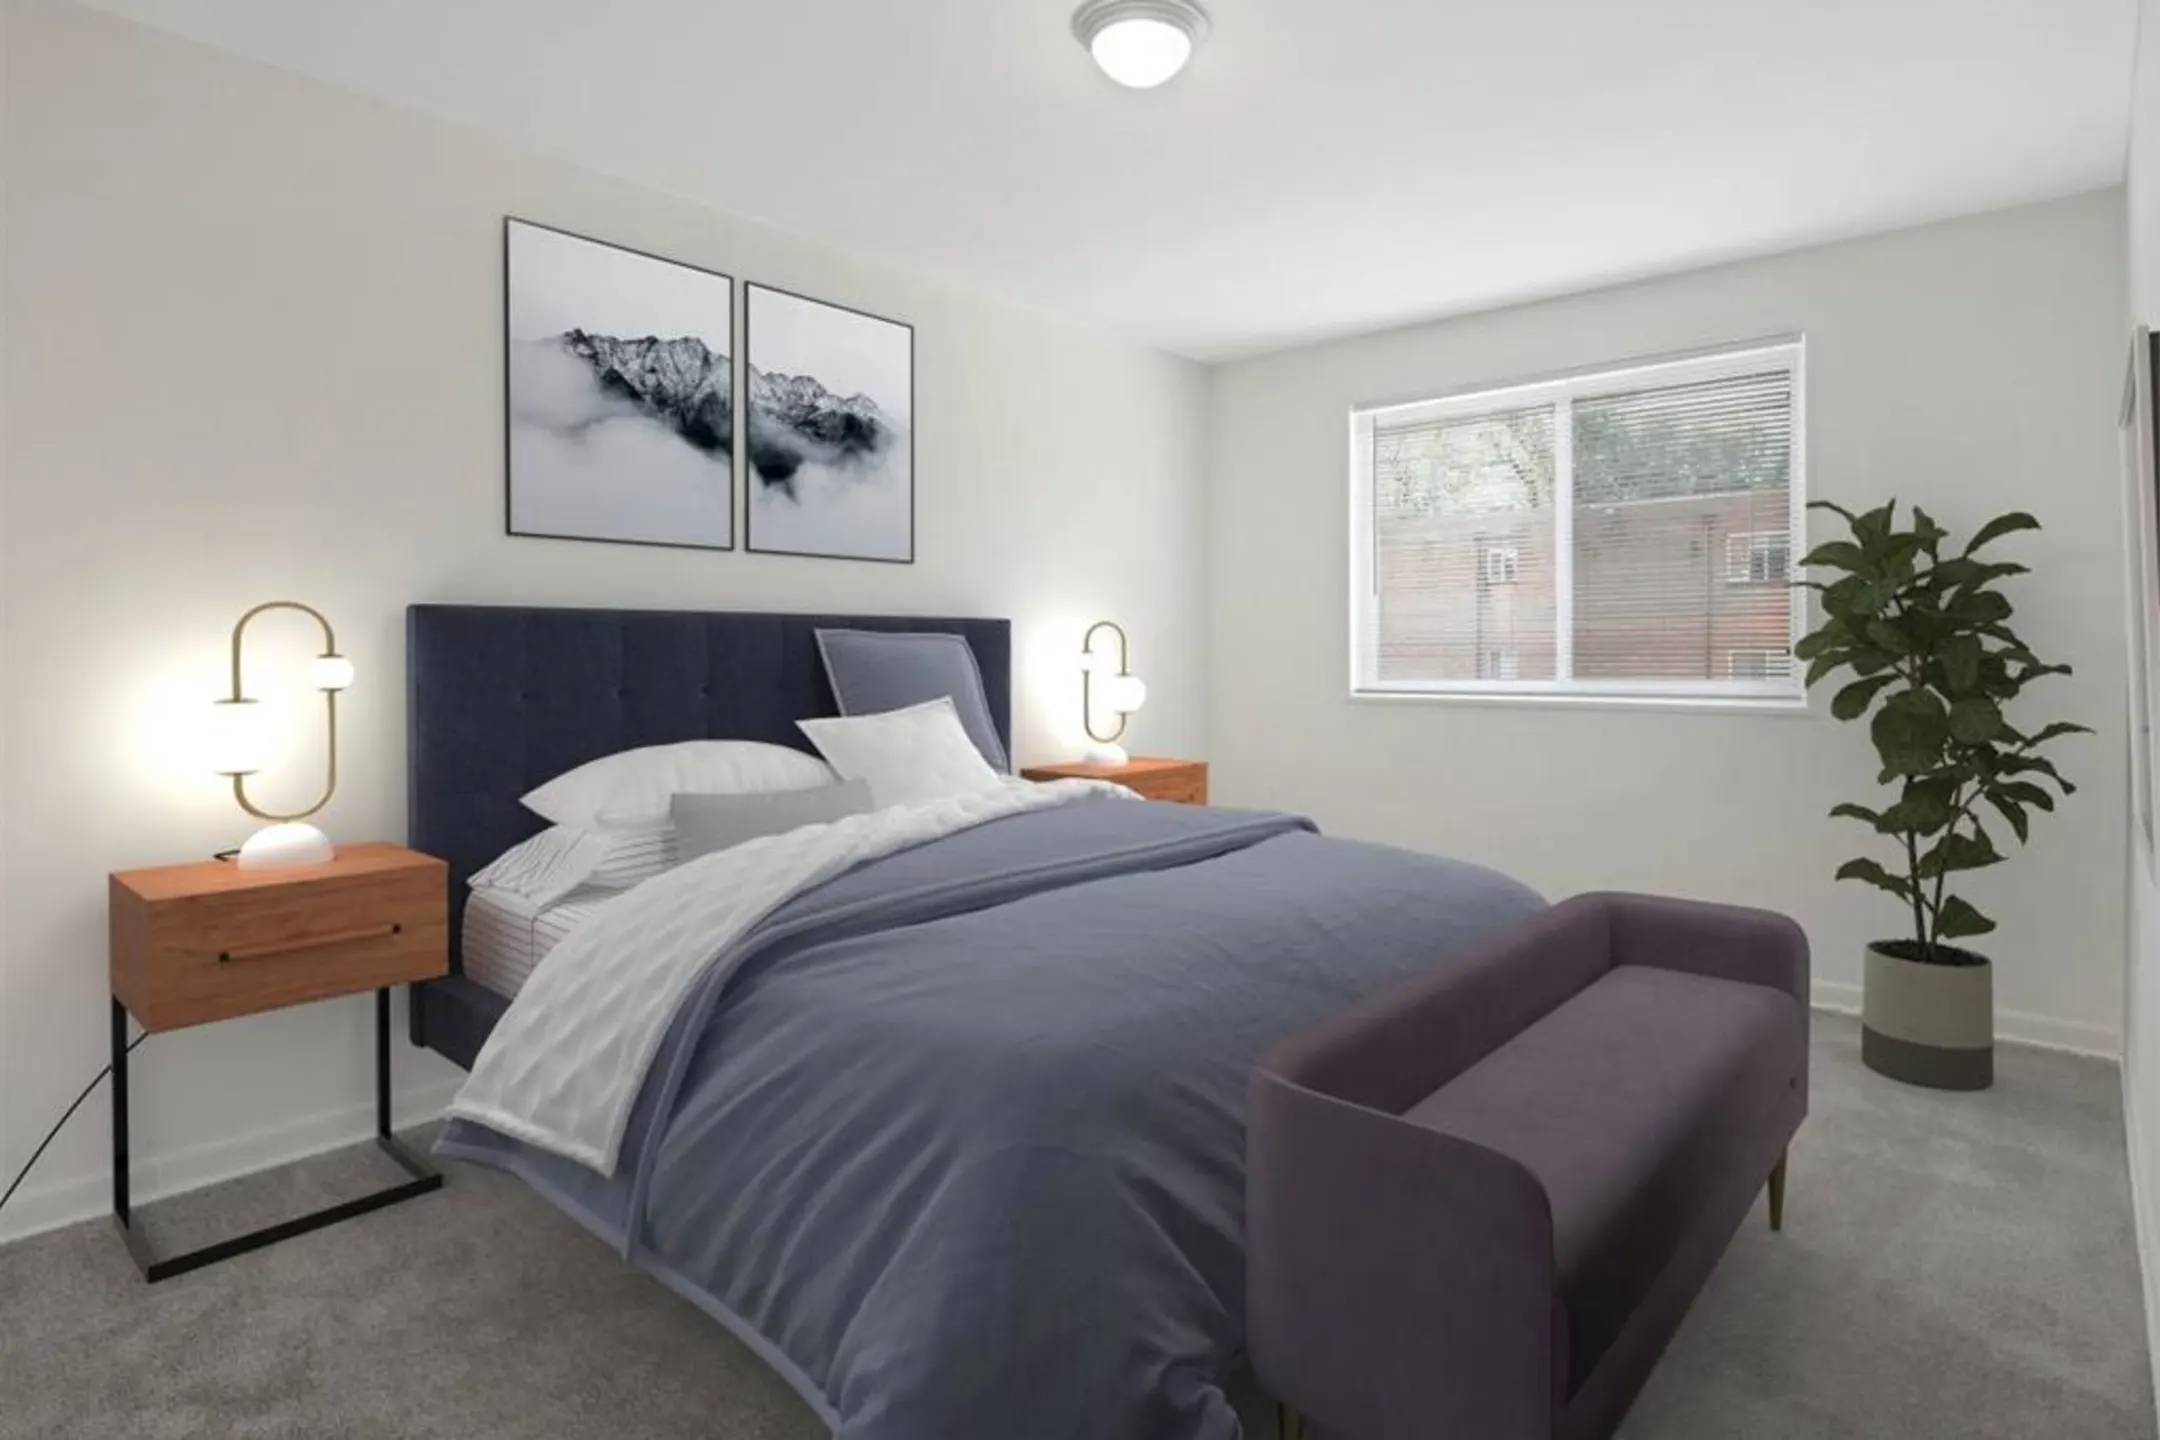 Bedroom - Fairmont Gardens Apartments - Annandale, VA